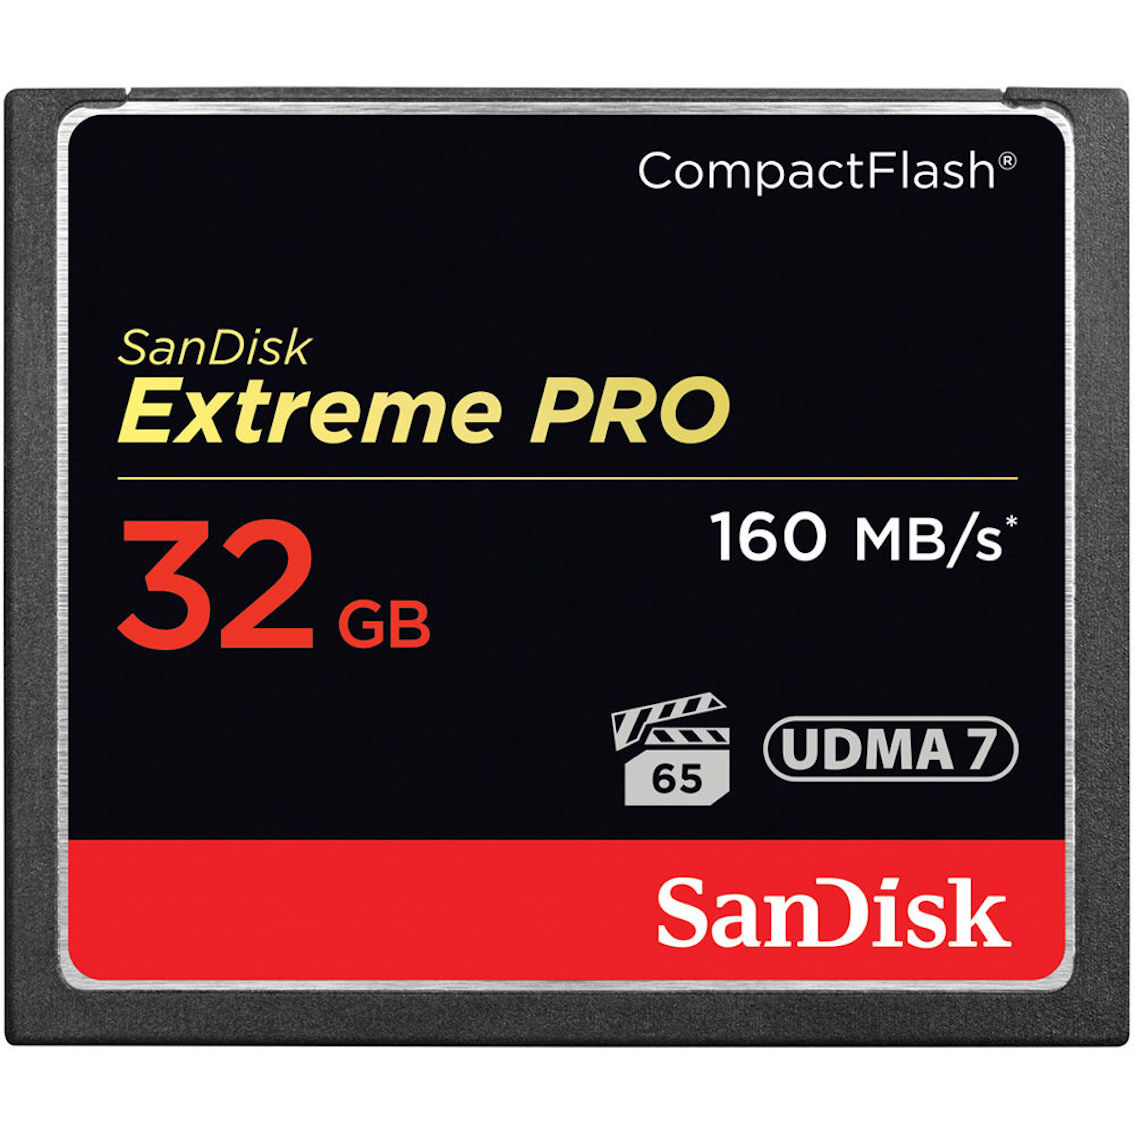 Карта памяти SanDisk Compact Flash  Extreme Pro  32GB  (160 MB/s)